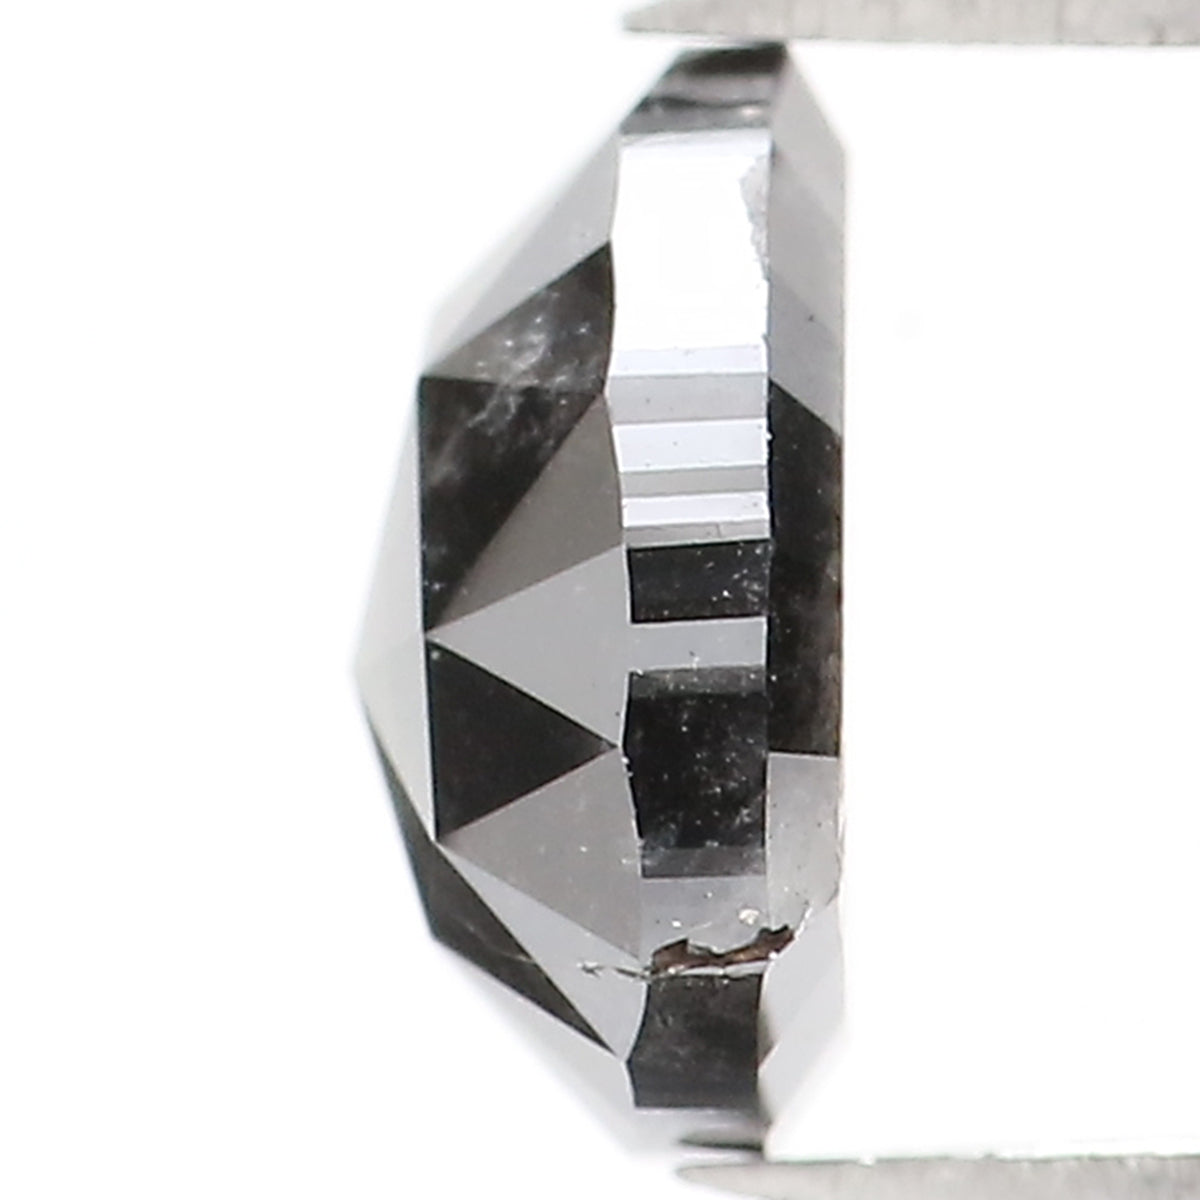 1.25 CT Natural Loose Triangle Shape Diamond Salt And Pepper Triangle Diamond 6.95 MM Black Grey Color Triangle Cut Rose Cut Diamond LQ1382